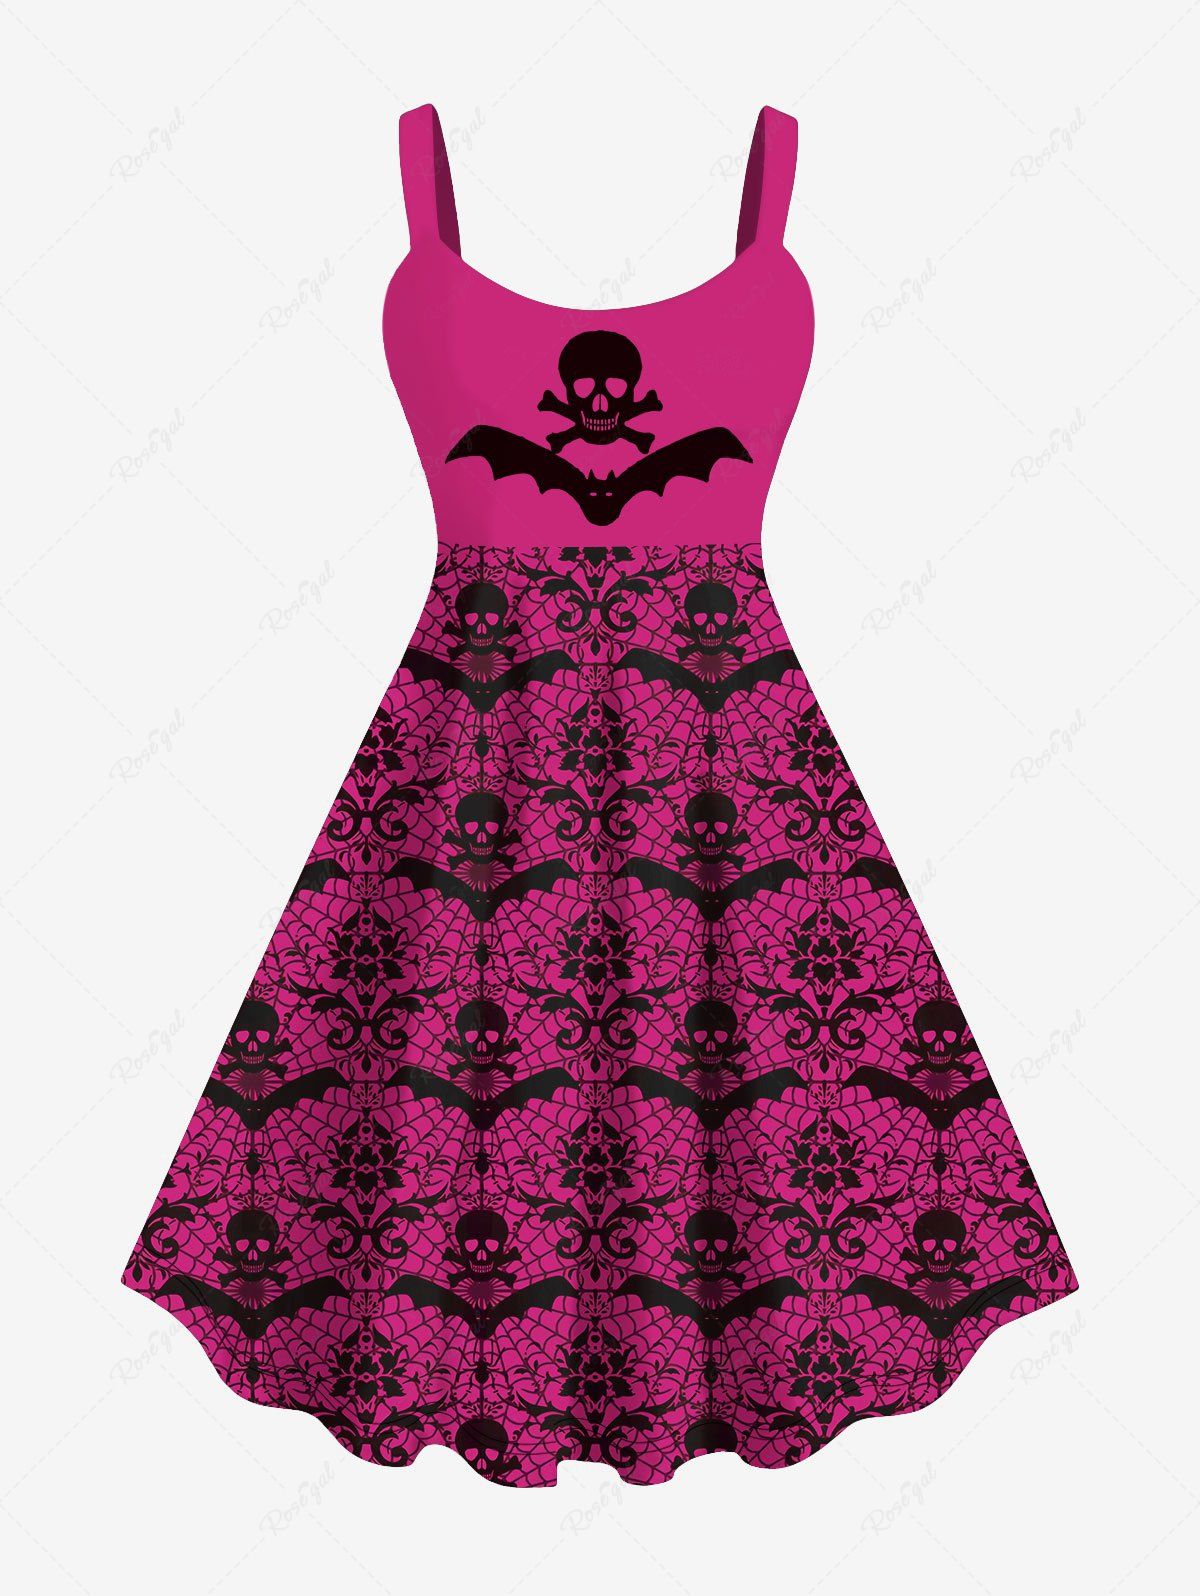 Chic Plus Size Halloween Skull Bat Spider Web Print Dress  